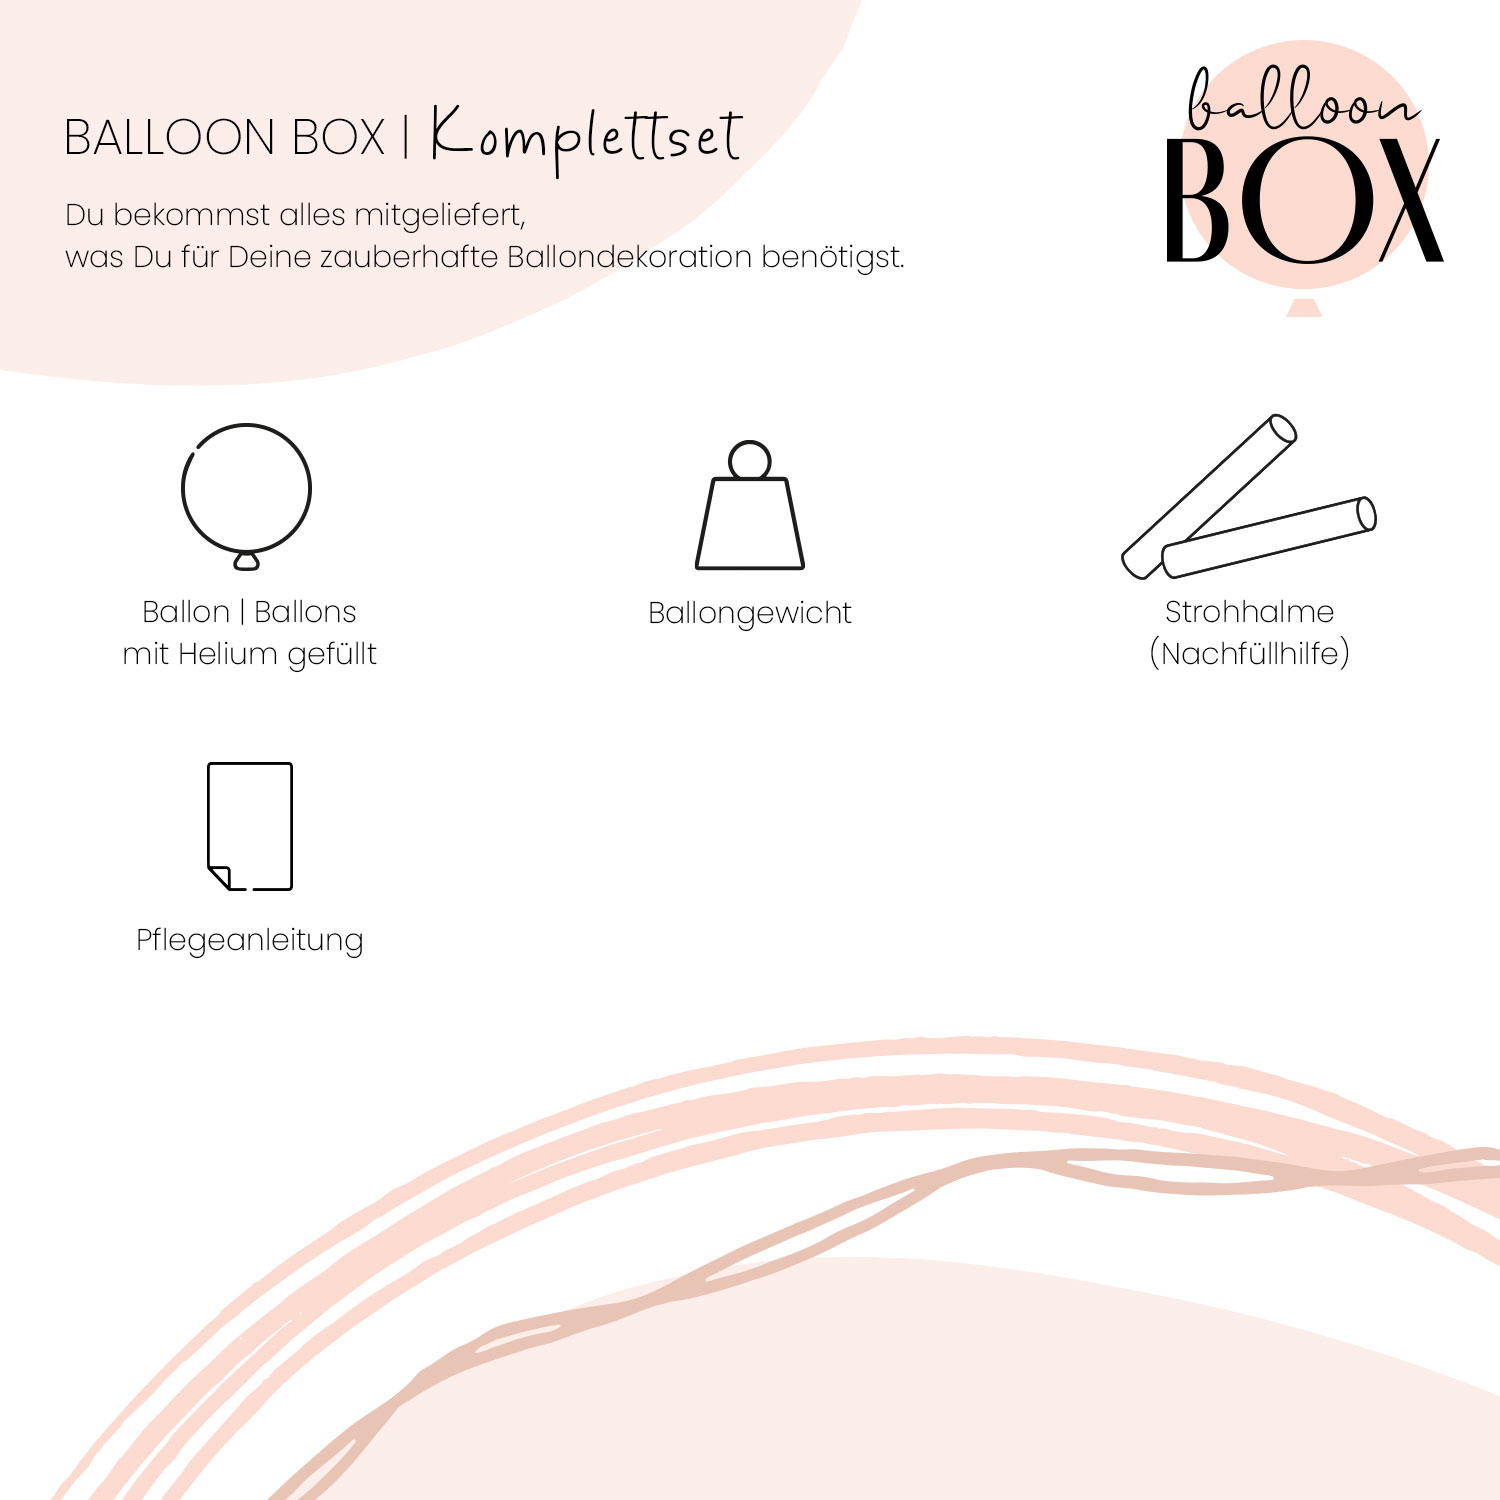 Heliumballon in a Box - Du bist 1. Klasse